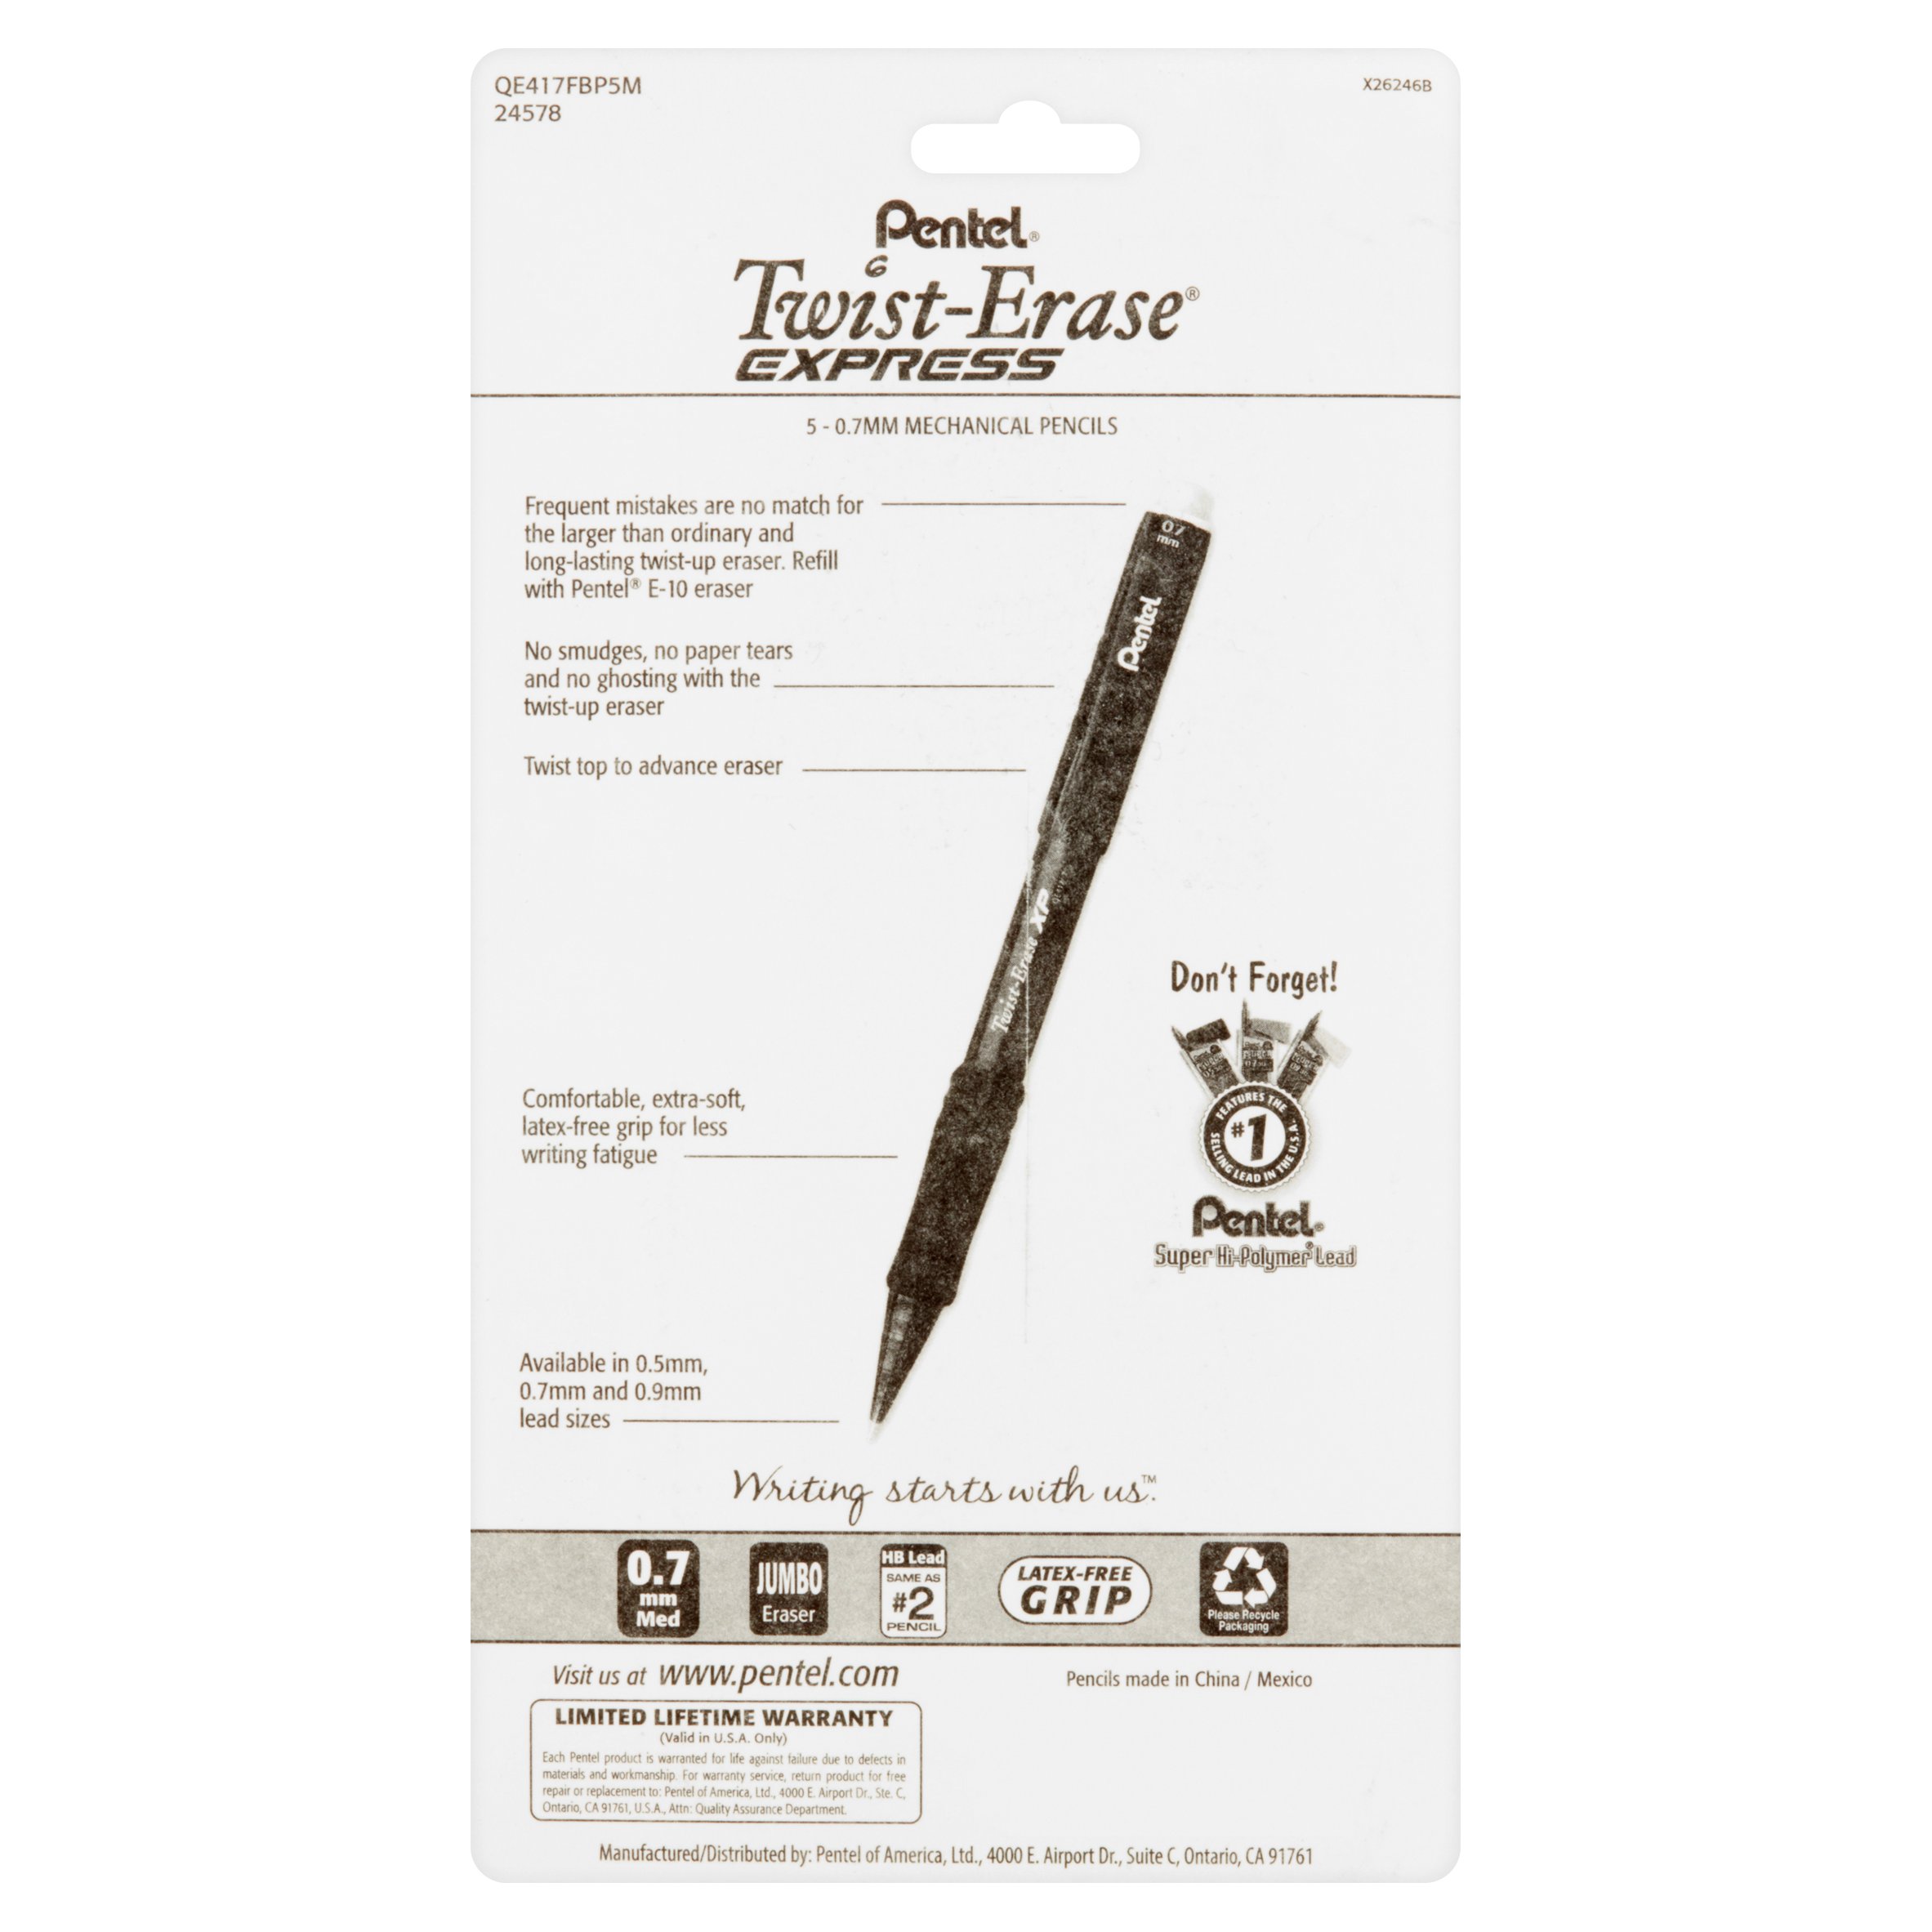 Pentel Twist-Erase EXPRESS Pencil (0.7mm) Asstd Barrel Colors, 5-Pk - image 2 of 6